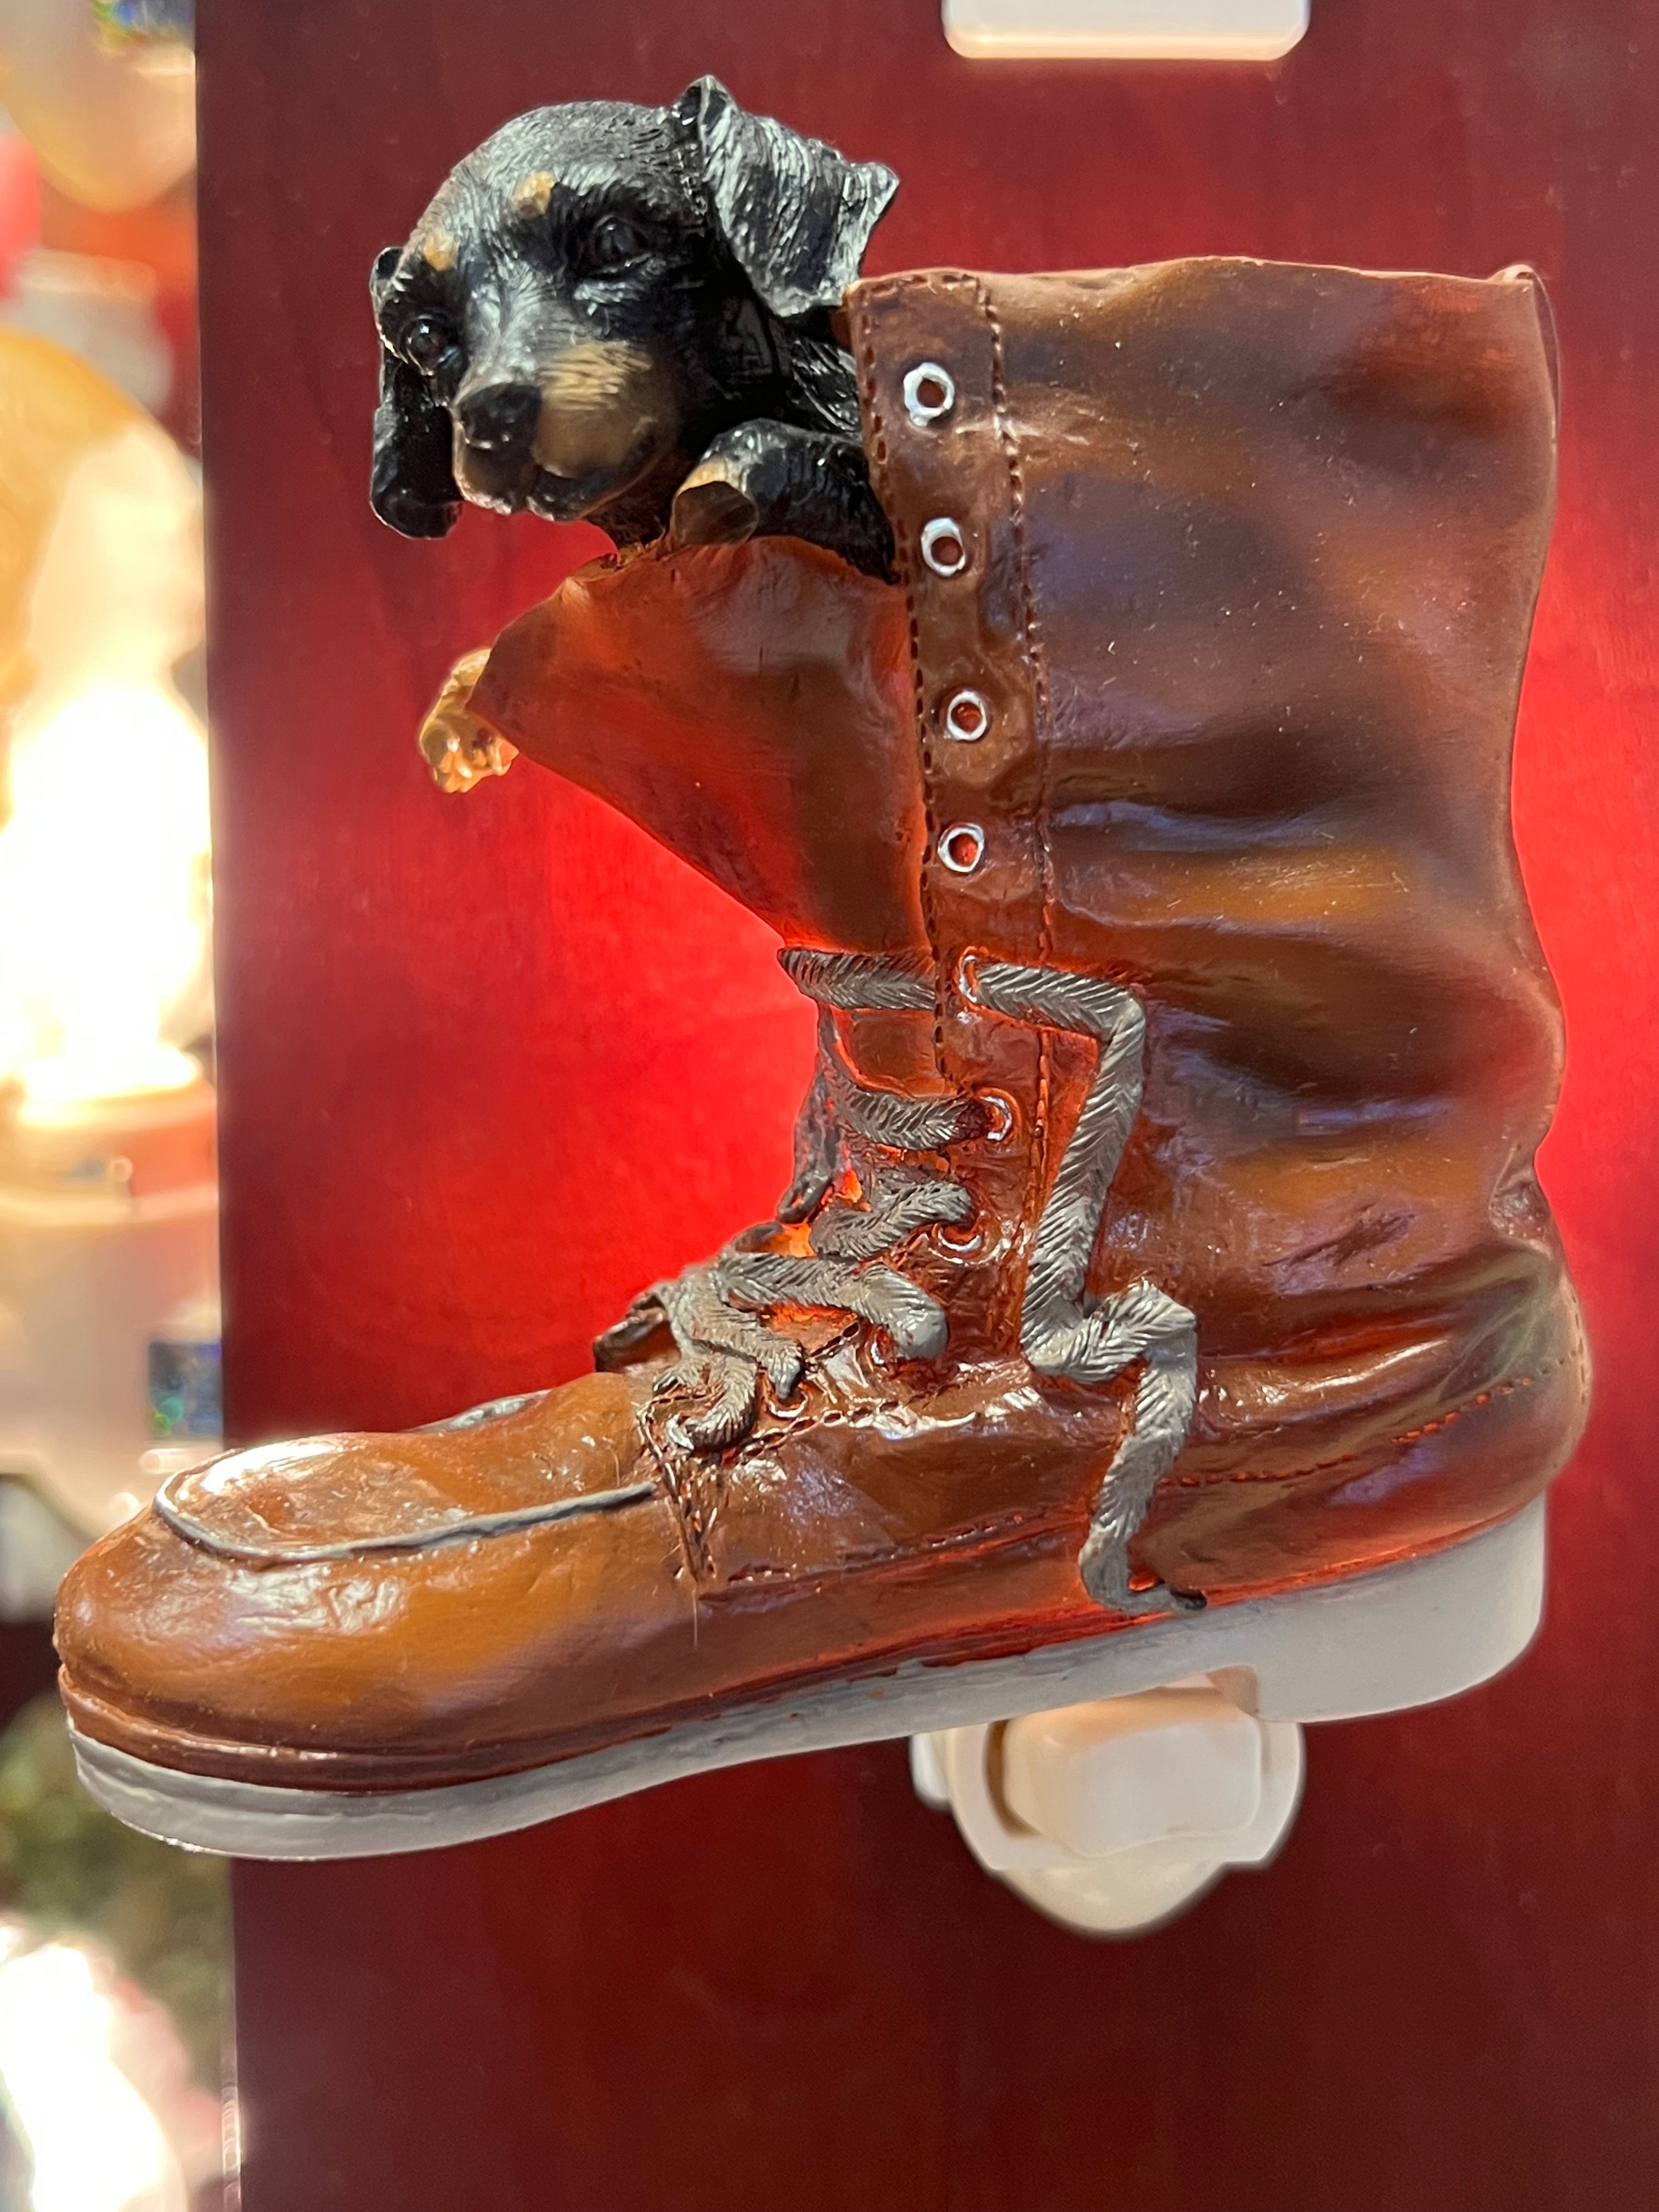 Dachshund Puppy in Boot Nigh Light